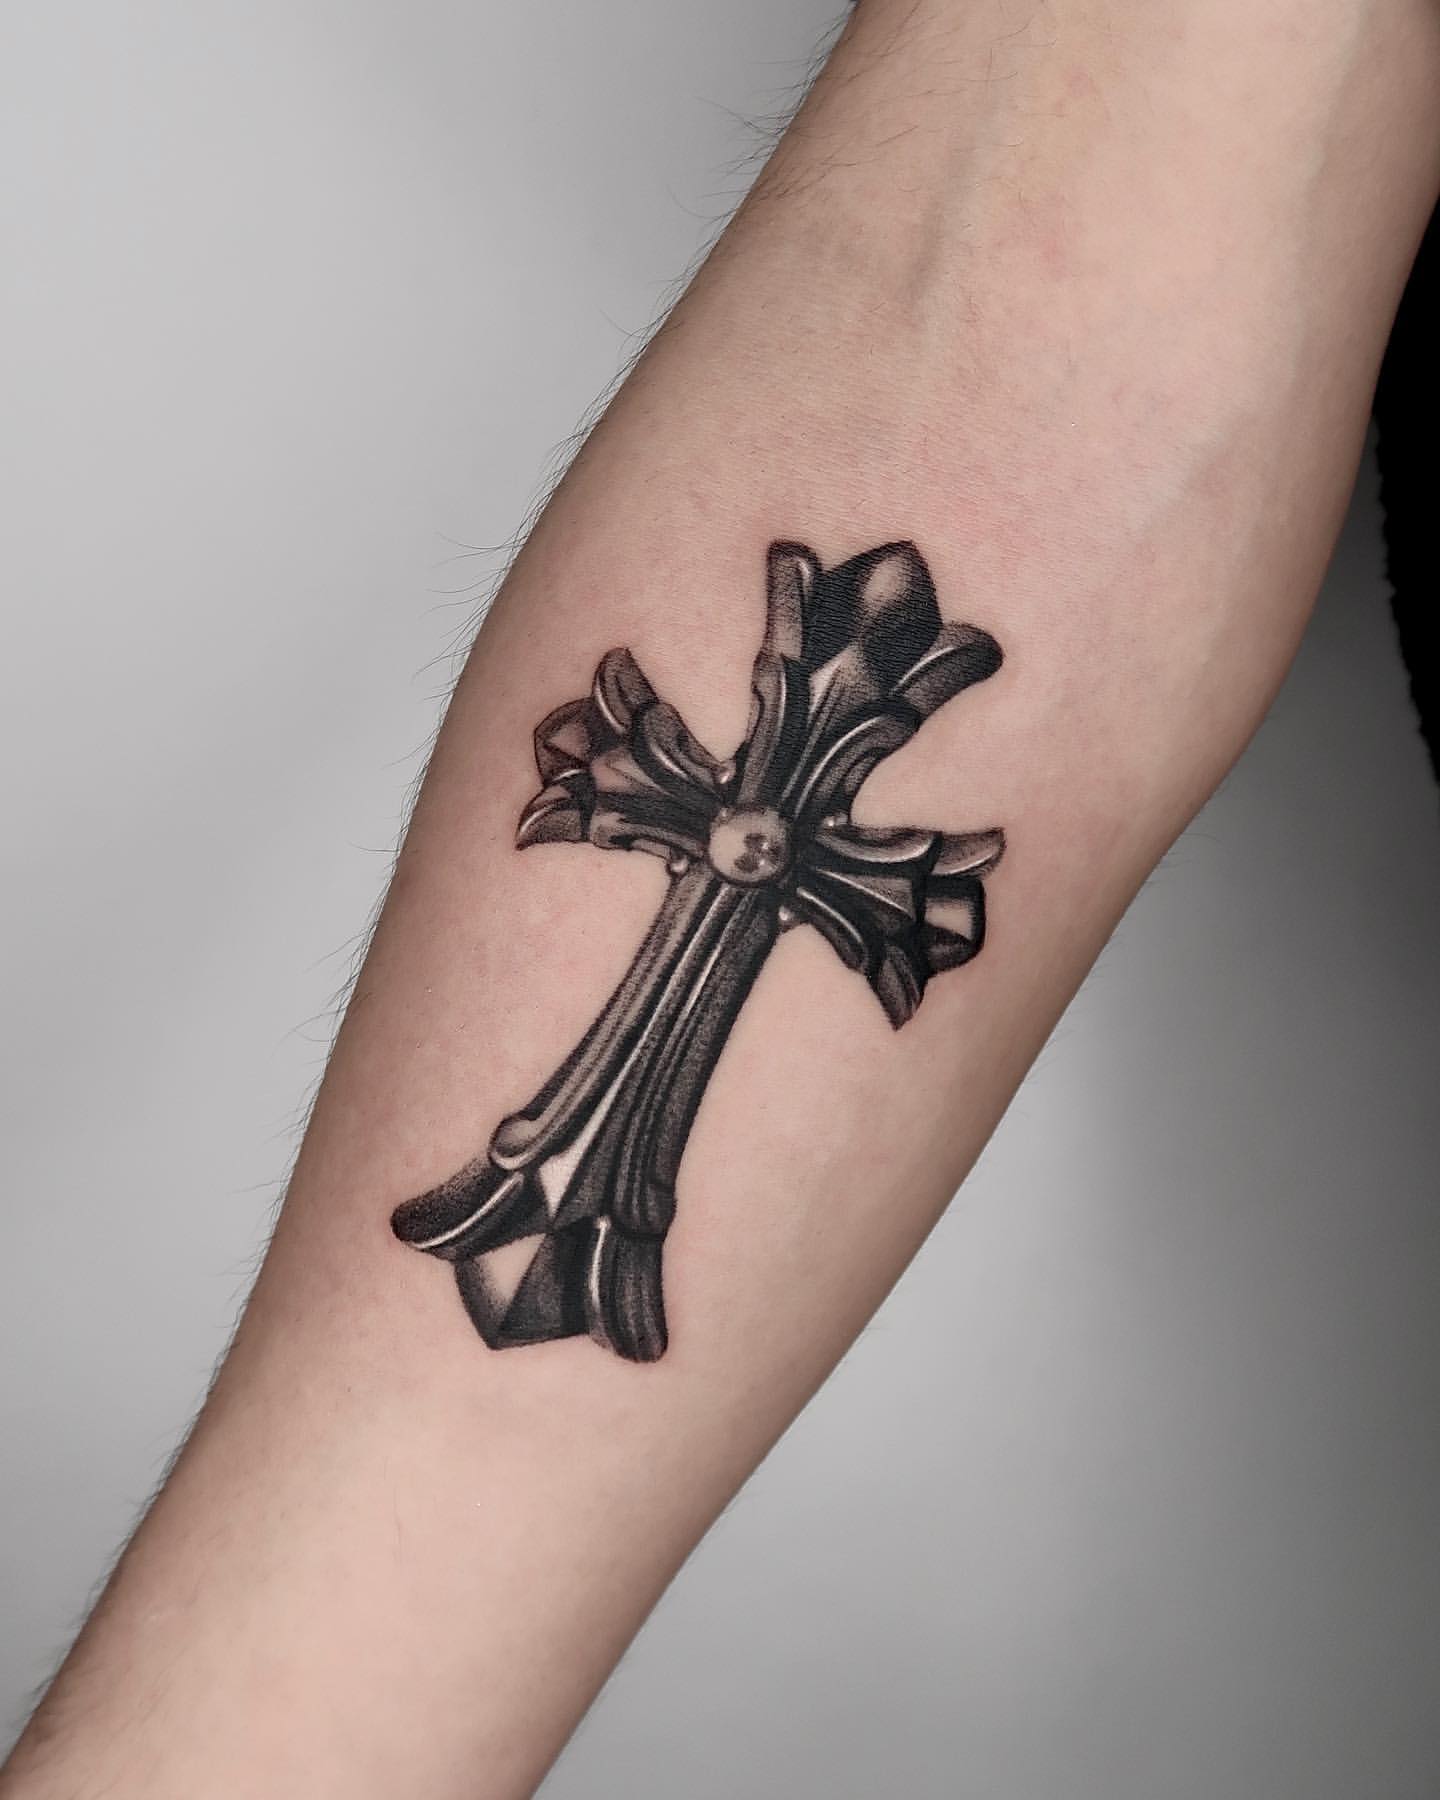 Christian Tattoo Ideas | Designs for Christian Tattoos